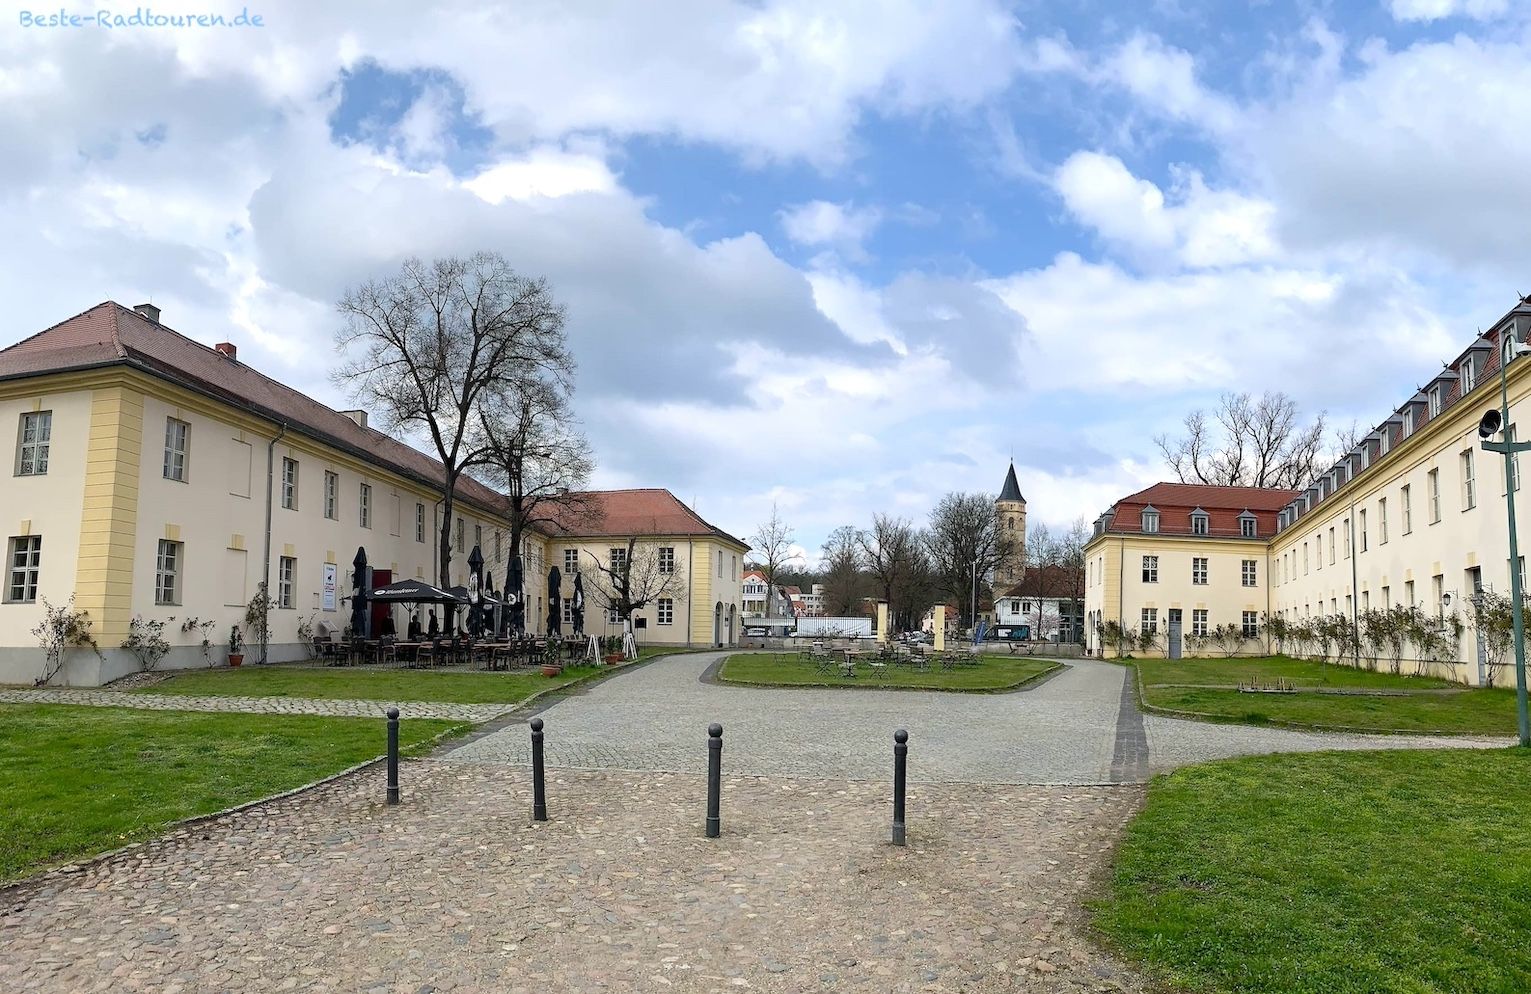 Foto vom Jagdschloss Königs Wusterhausen aus: Schlosshof, Kavaliershäuser, Kreuzkirche